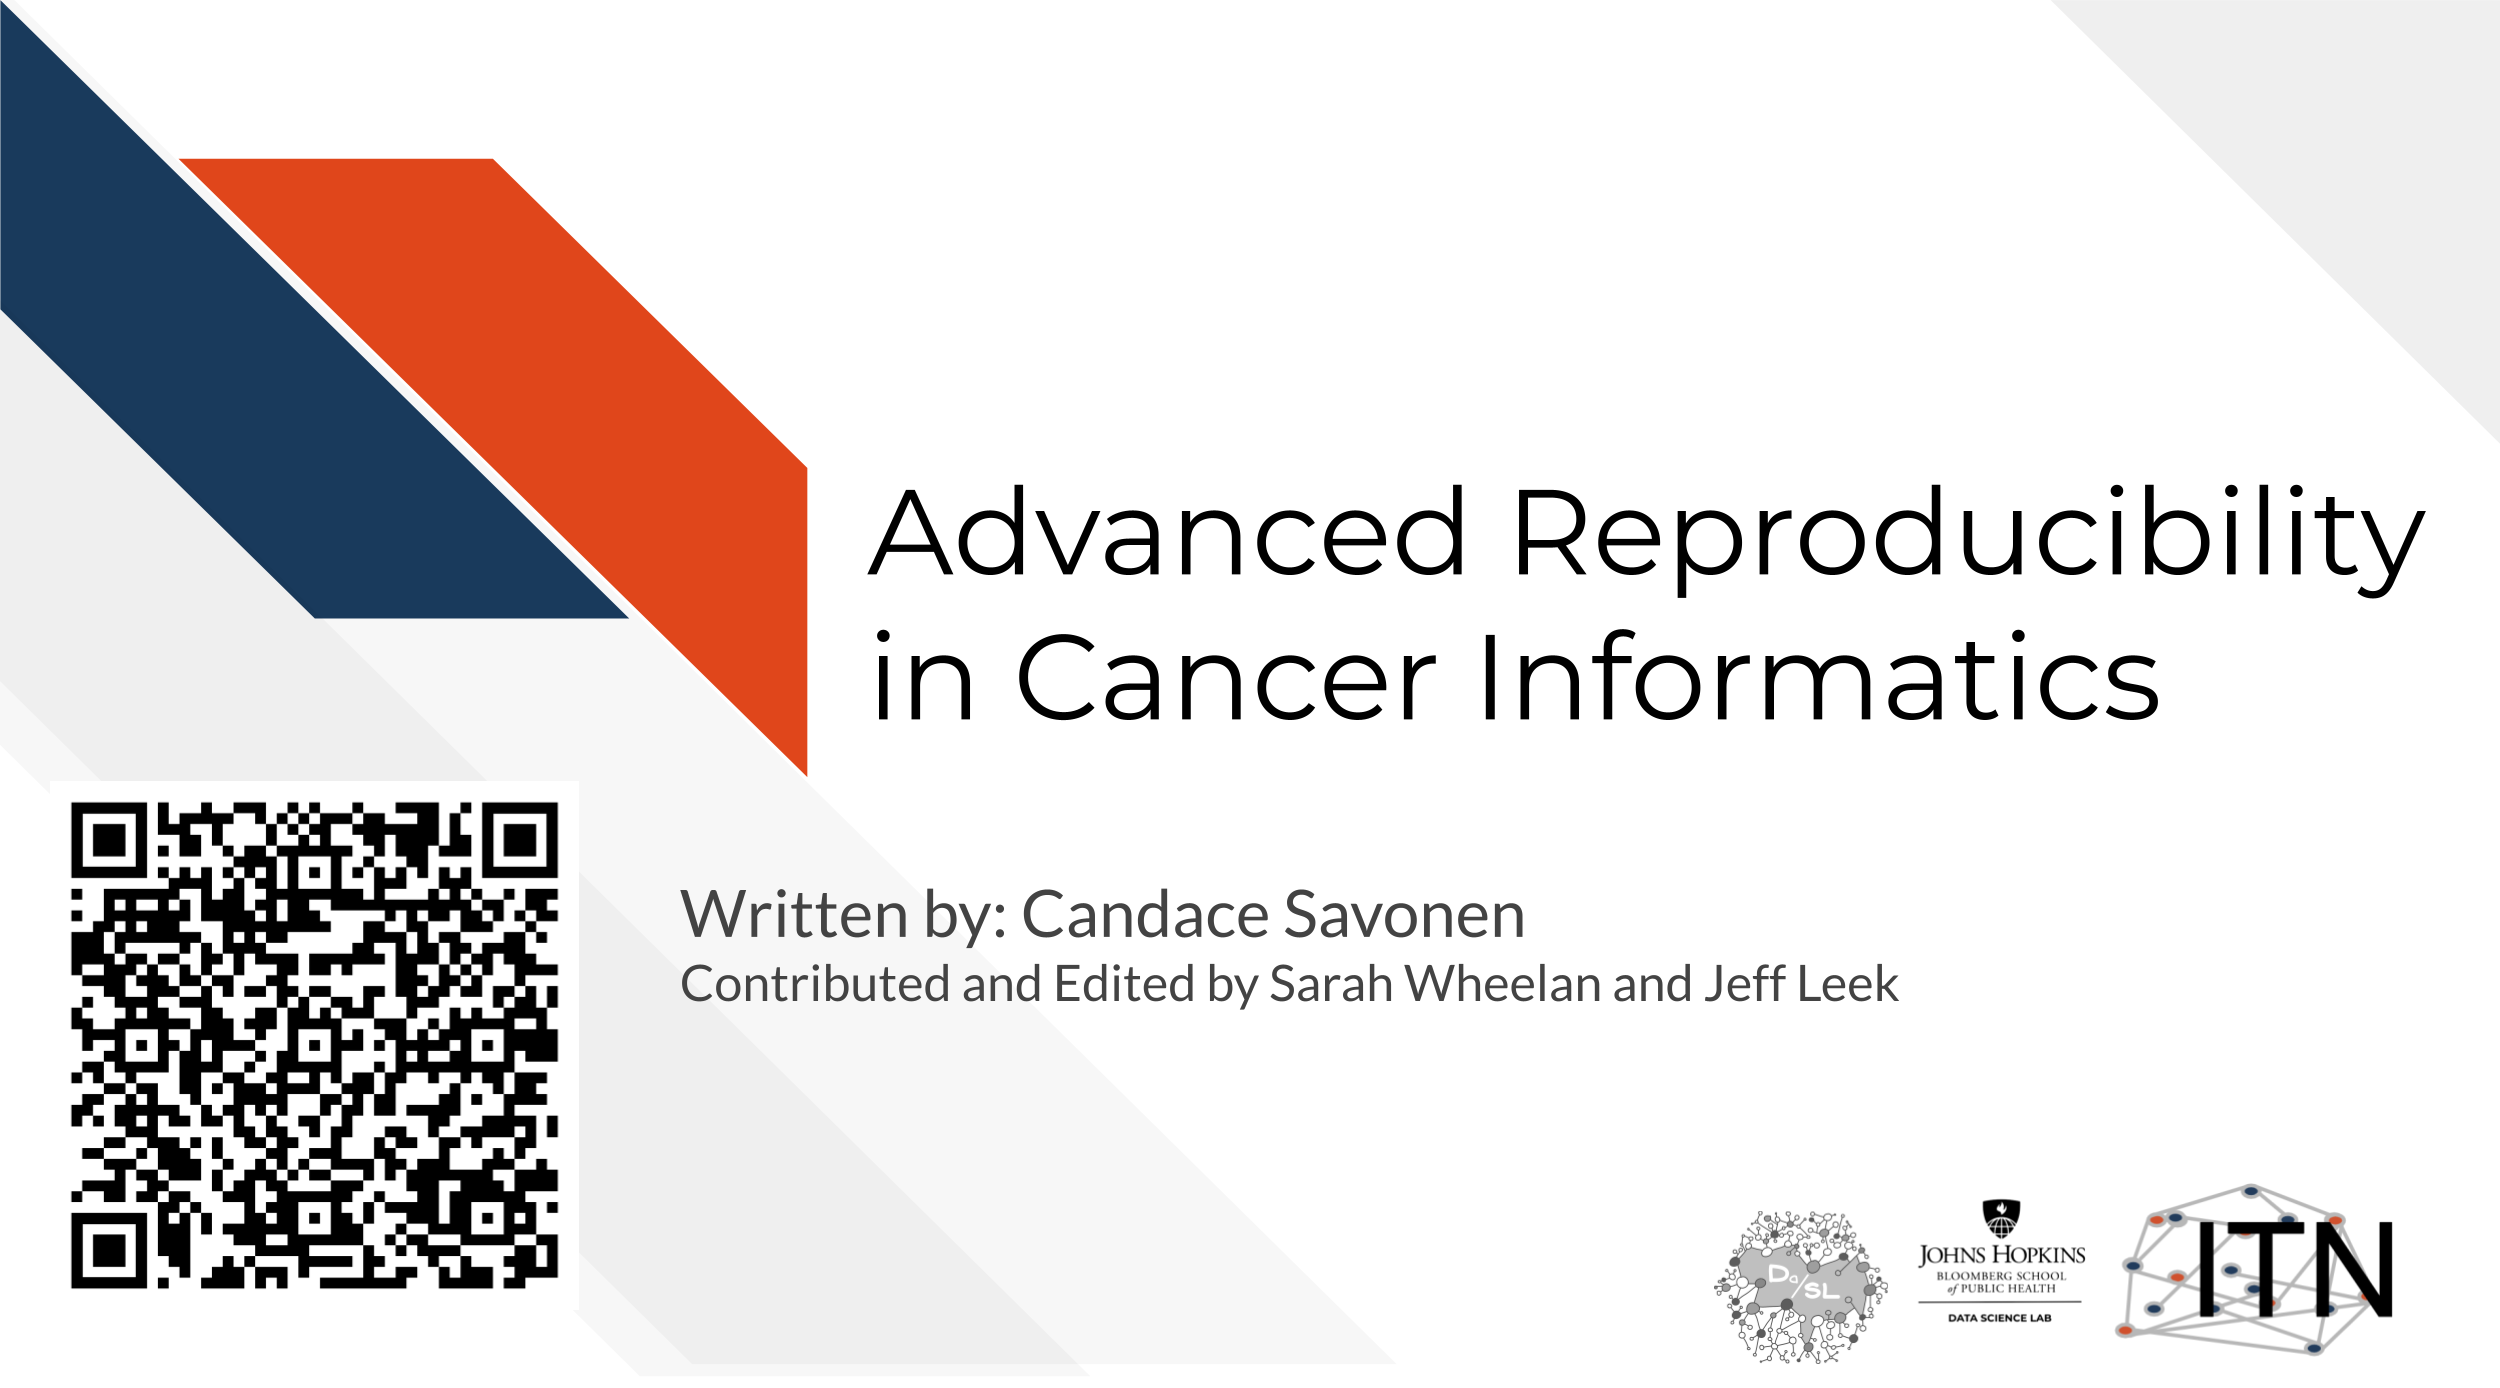 Title image: Advanced Reproducibility in Cancer Informatics